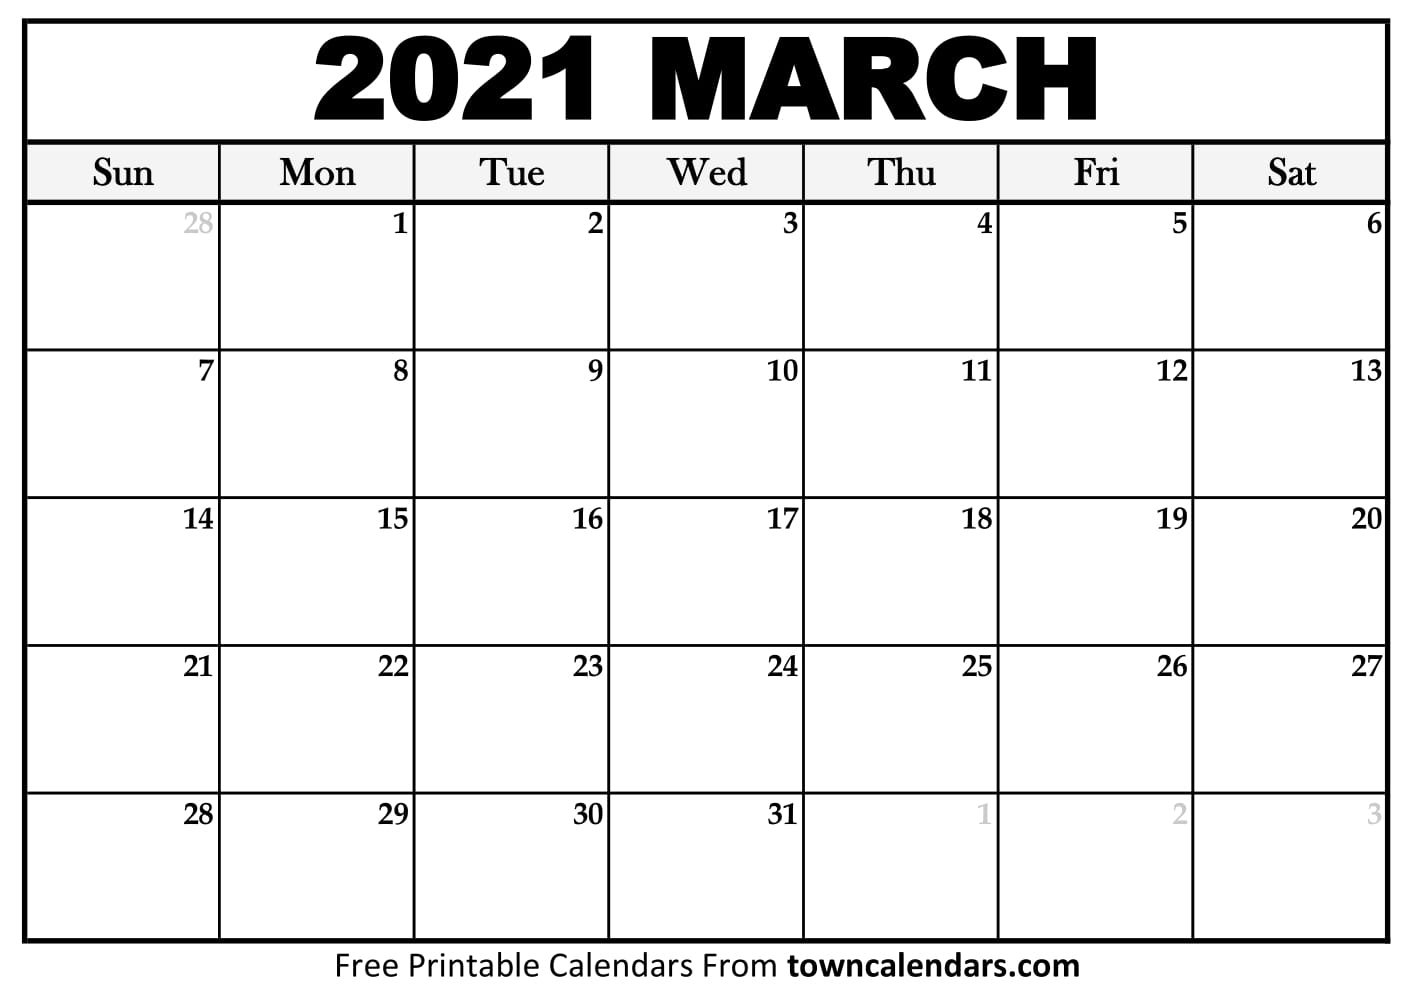 Printable March 2021 Calendar - Towncalendars